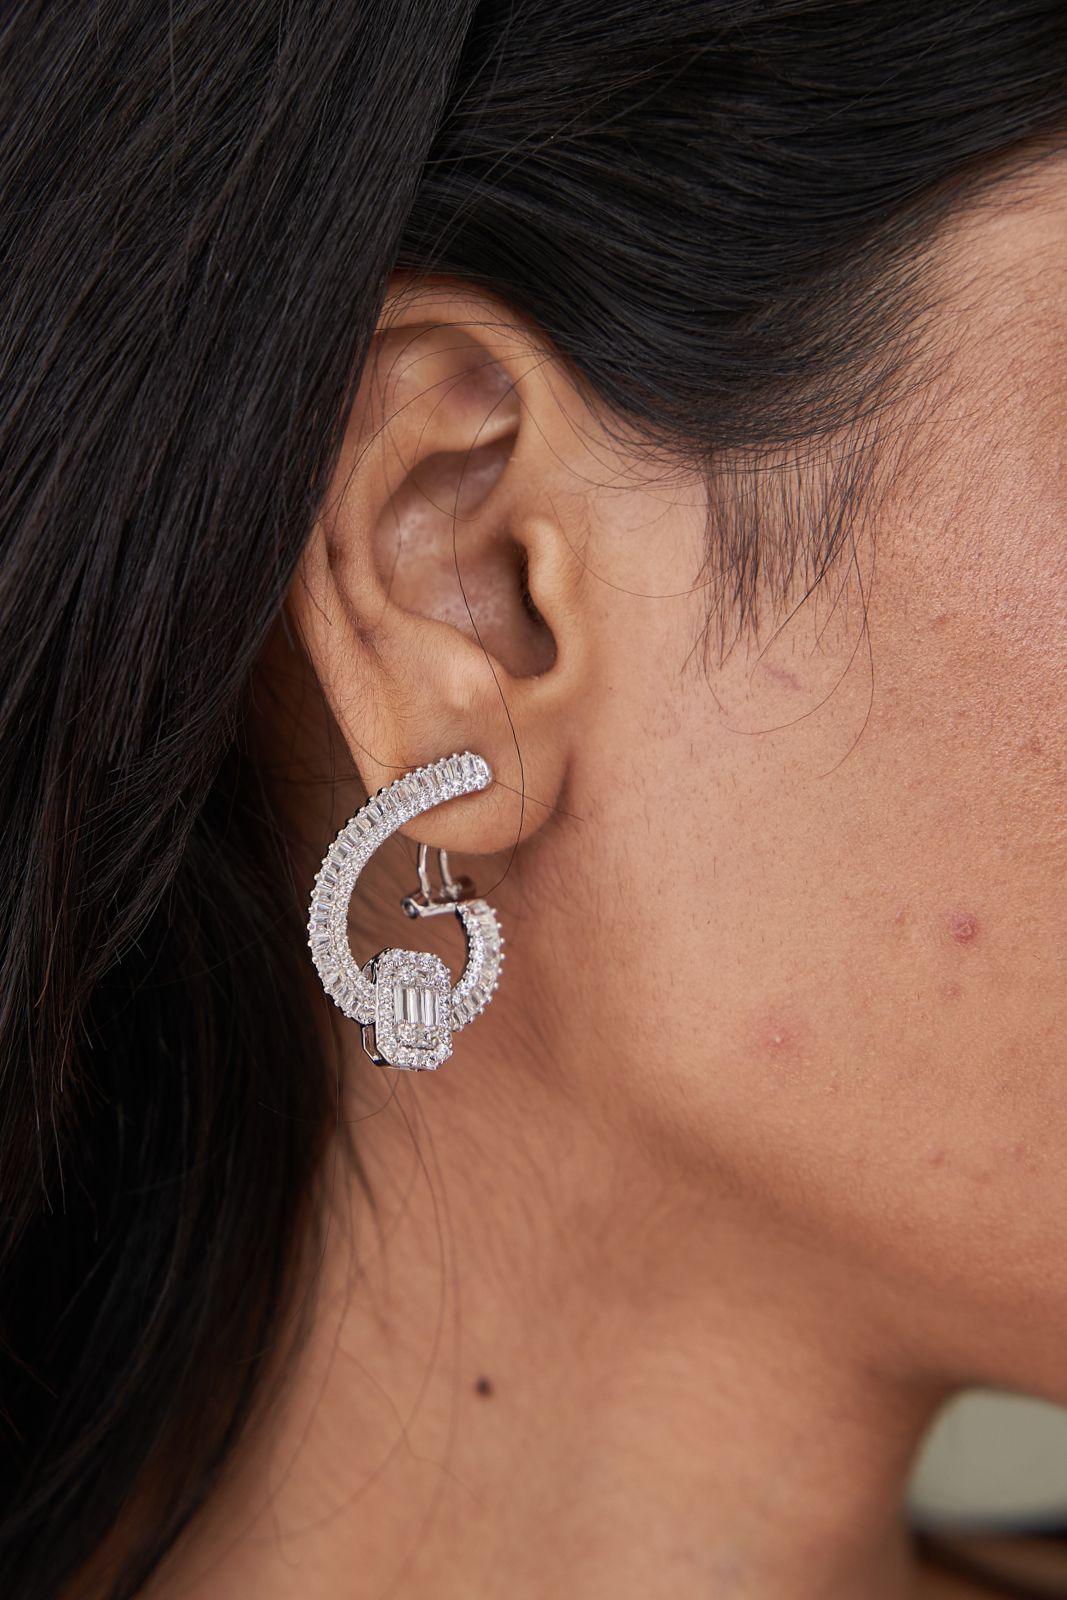 Jual Round Pressure Setting Diamond Earrings (2 carat face) - Jakarta Pusat  - Tdajewelry | Tokopedia